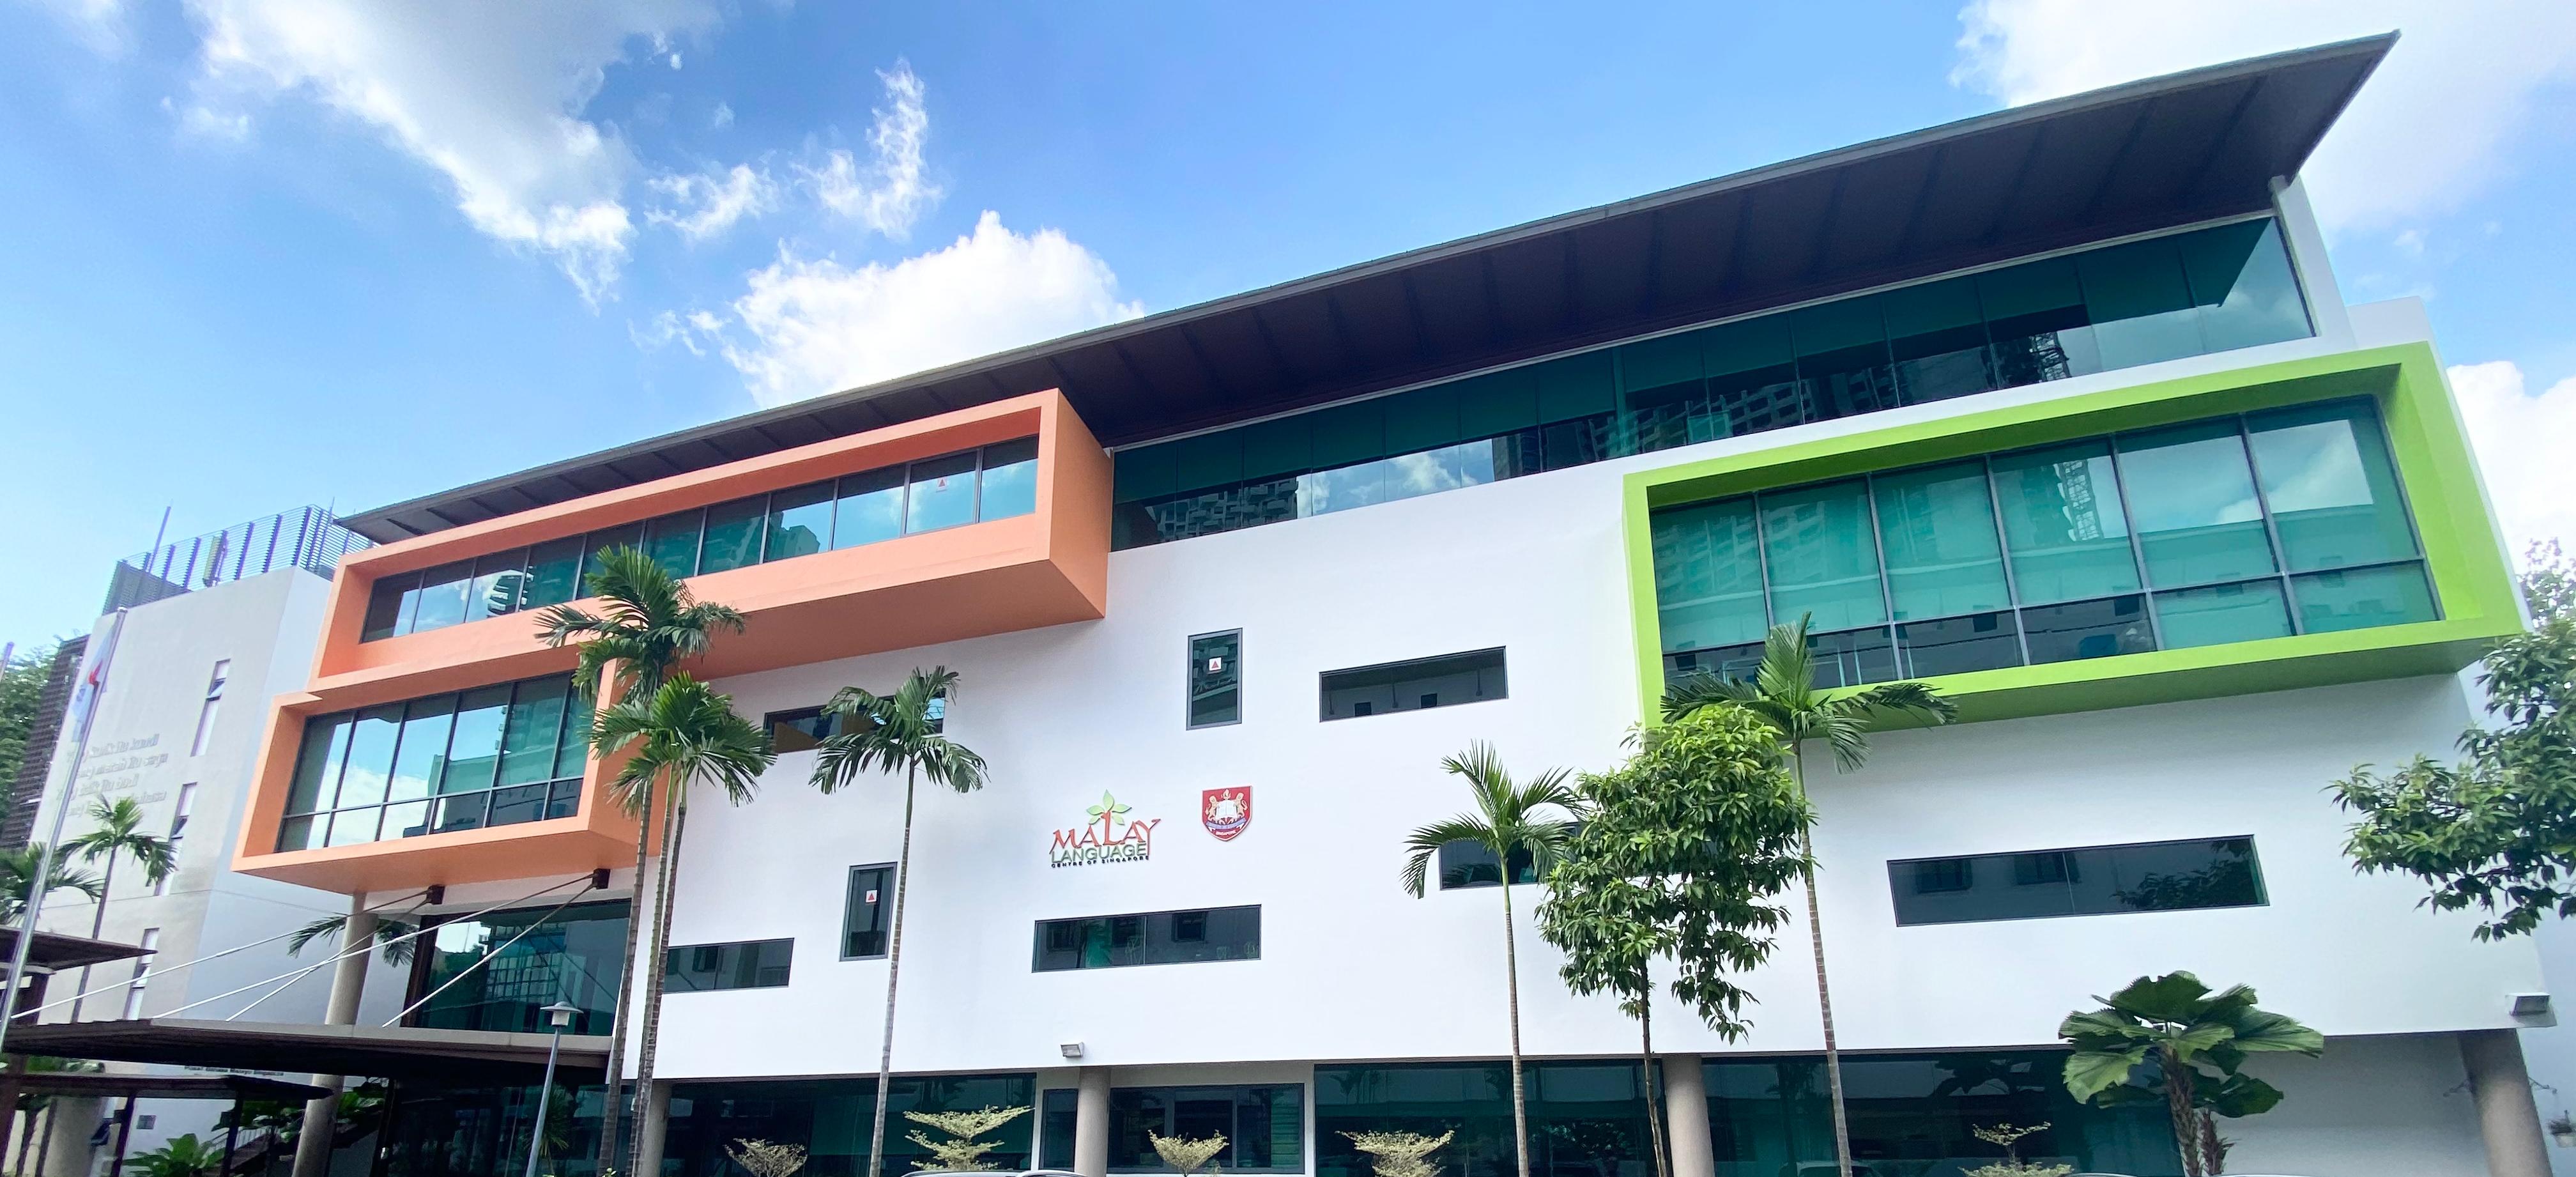 Malay Language Centre of Singapore